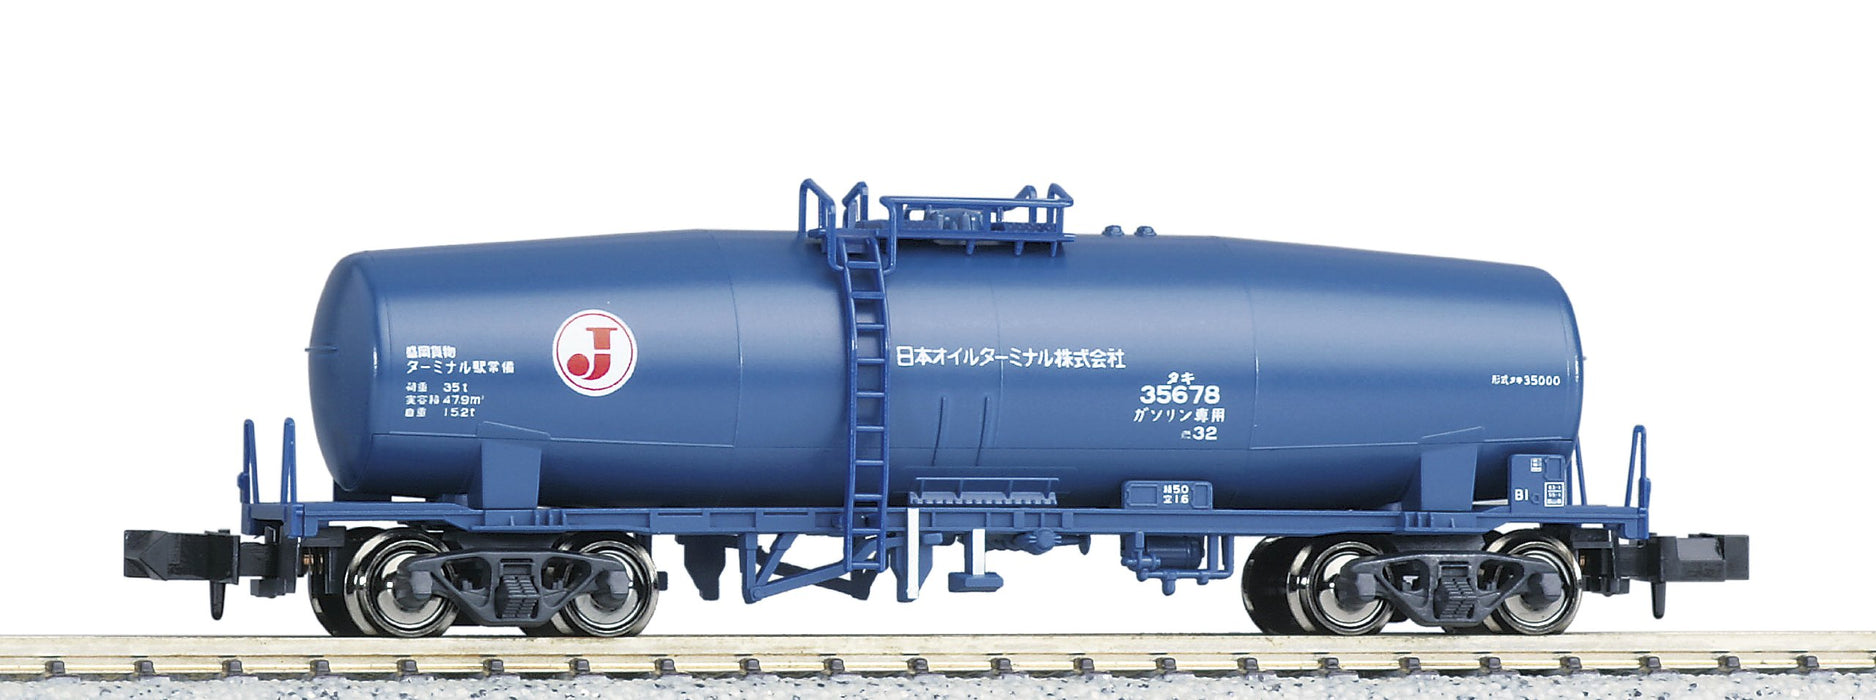 Kato N Spur Taki35000 Güterwagen – 8050-2 Japanisches Ölterminal, Modelleisenbahn